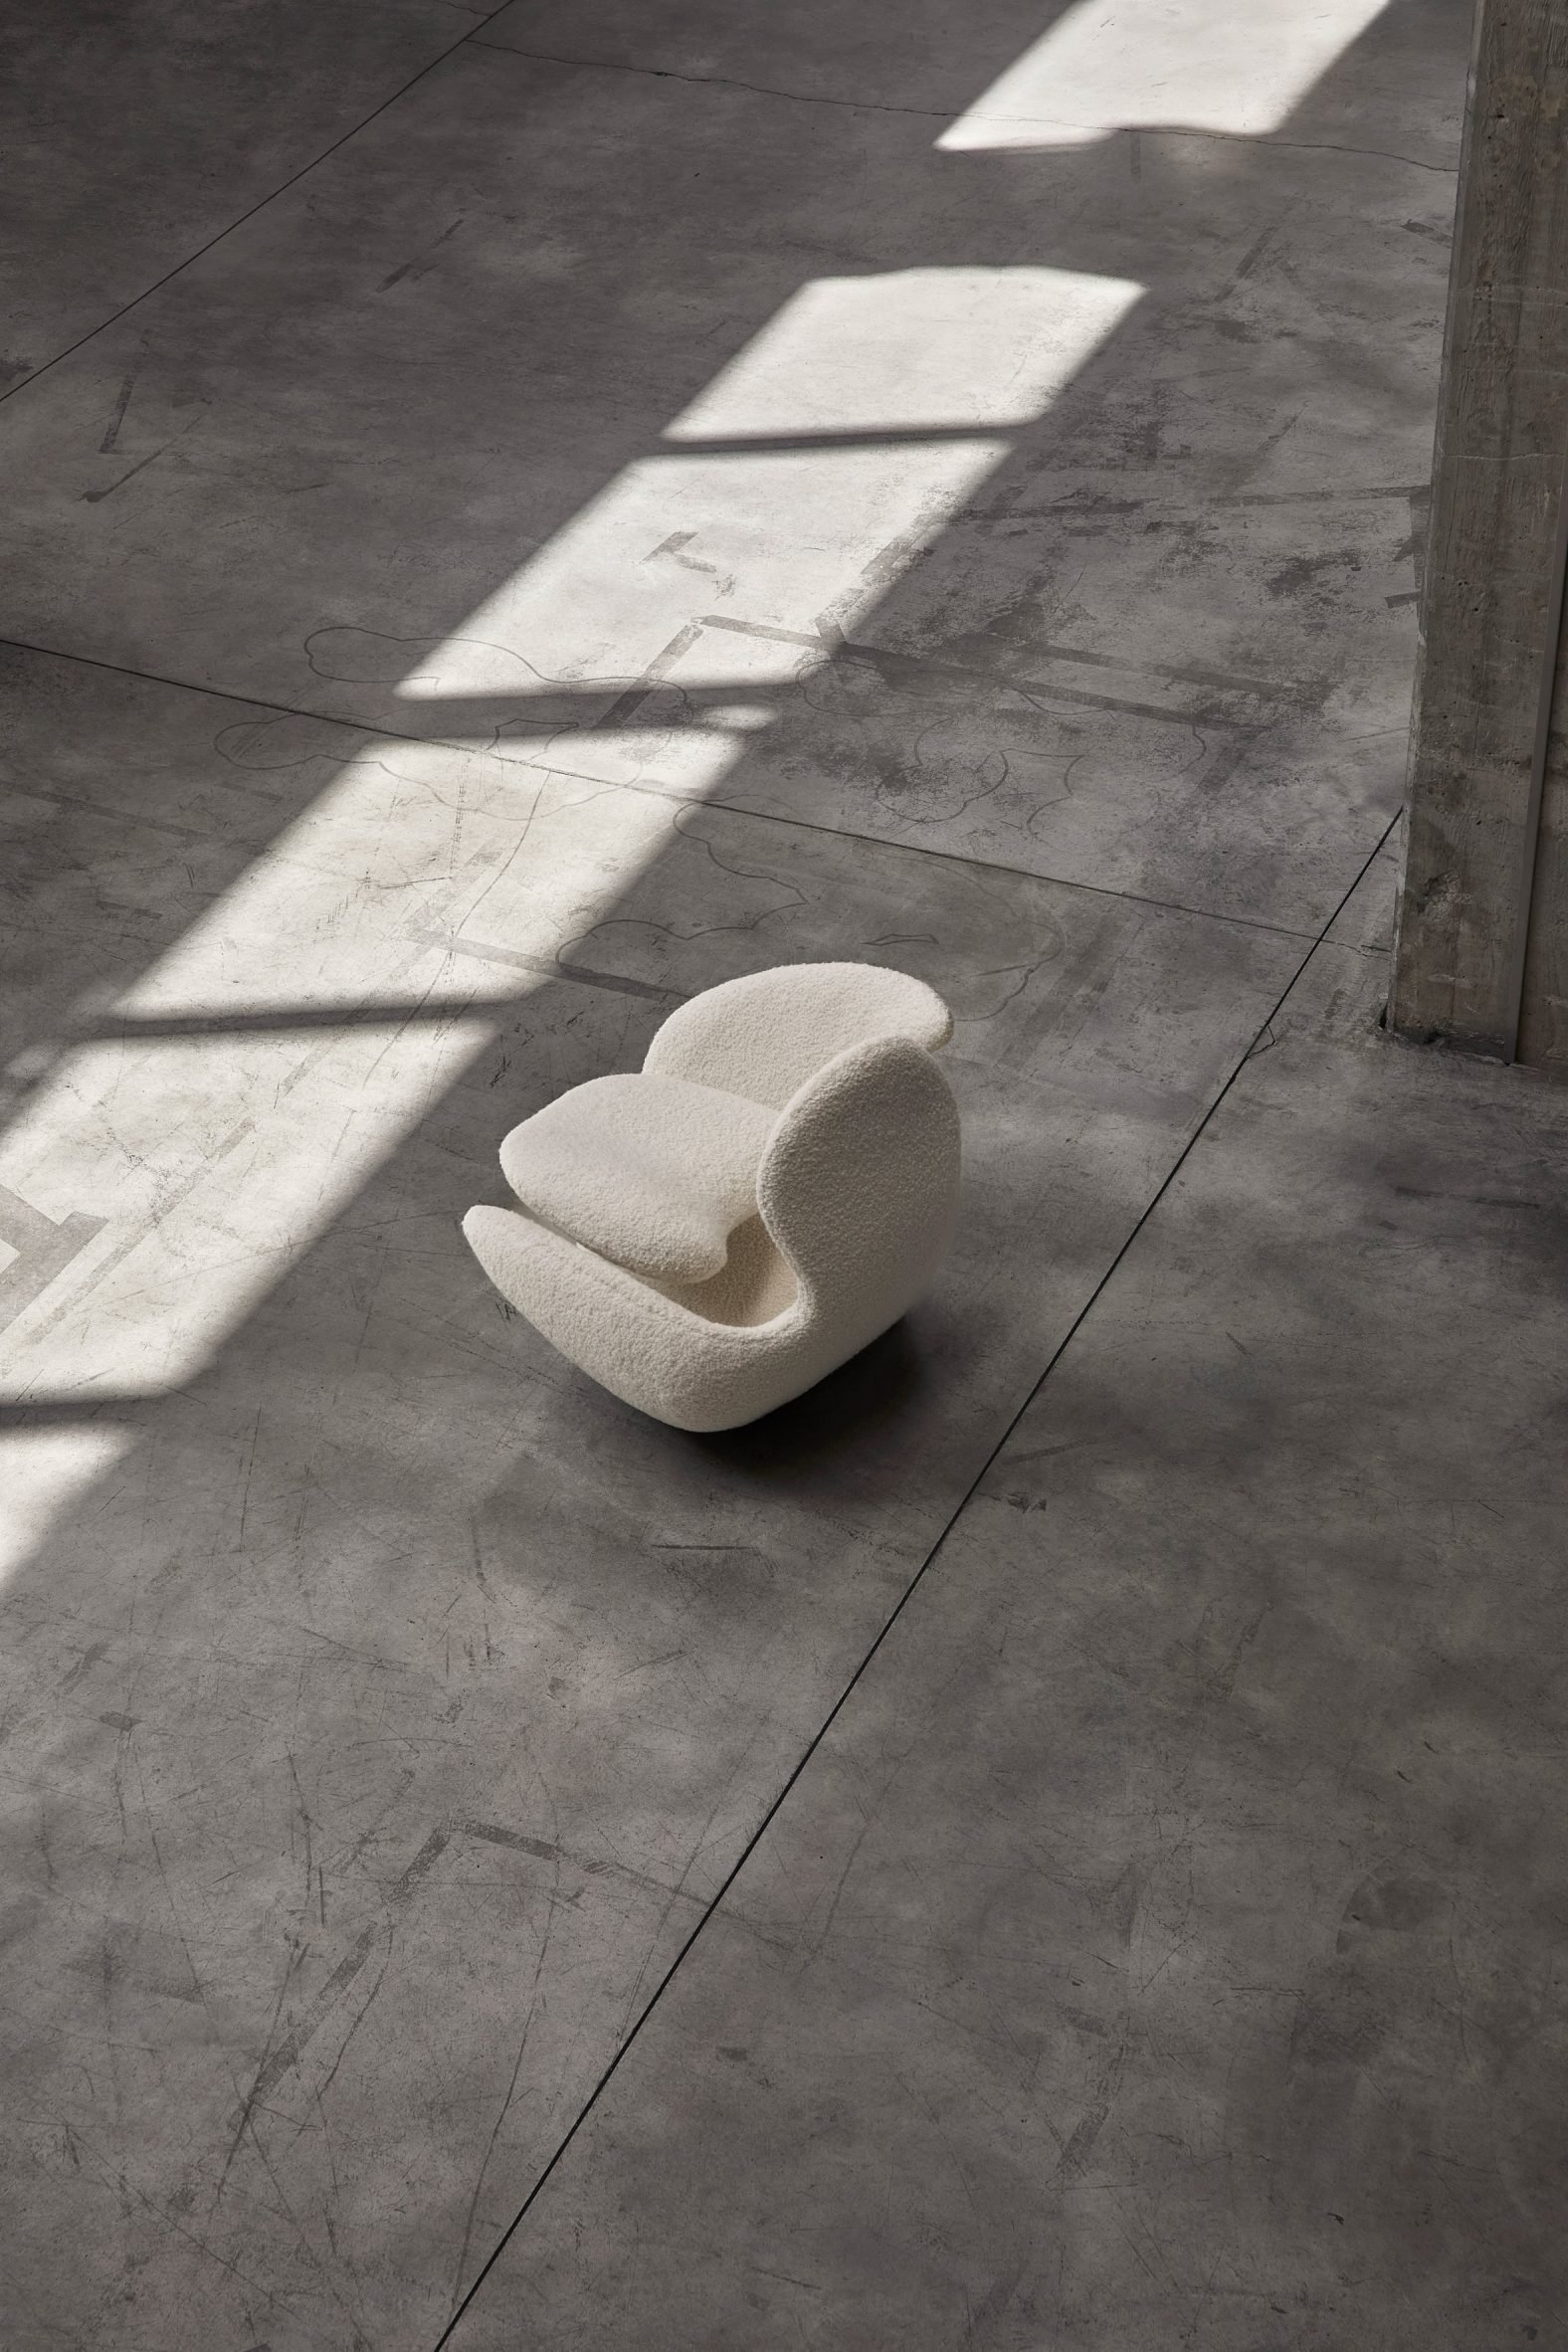 12 Chairs For Meditation by Andrés Reisinger for Nilufar